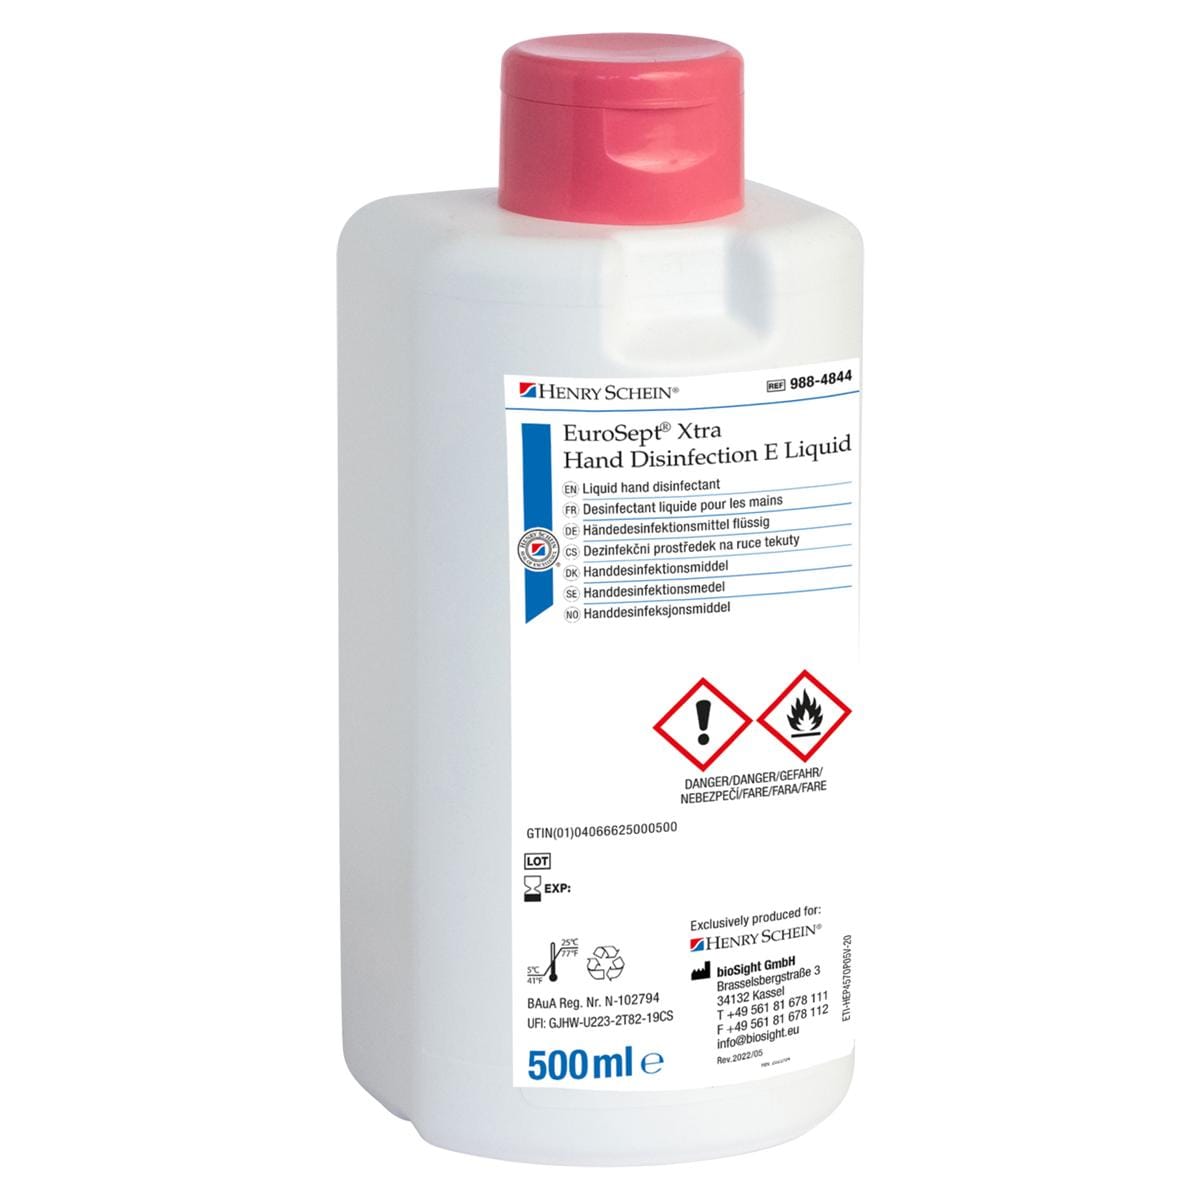 EuroSept Xtra Hand Disinfection E Liquid - Flacon, 500 ml